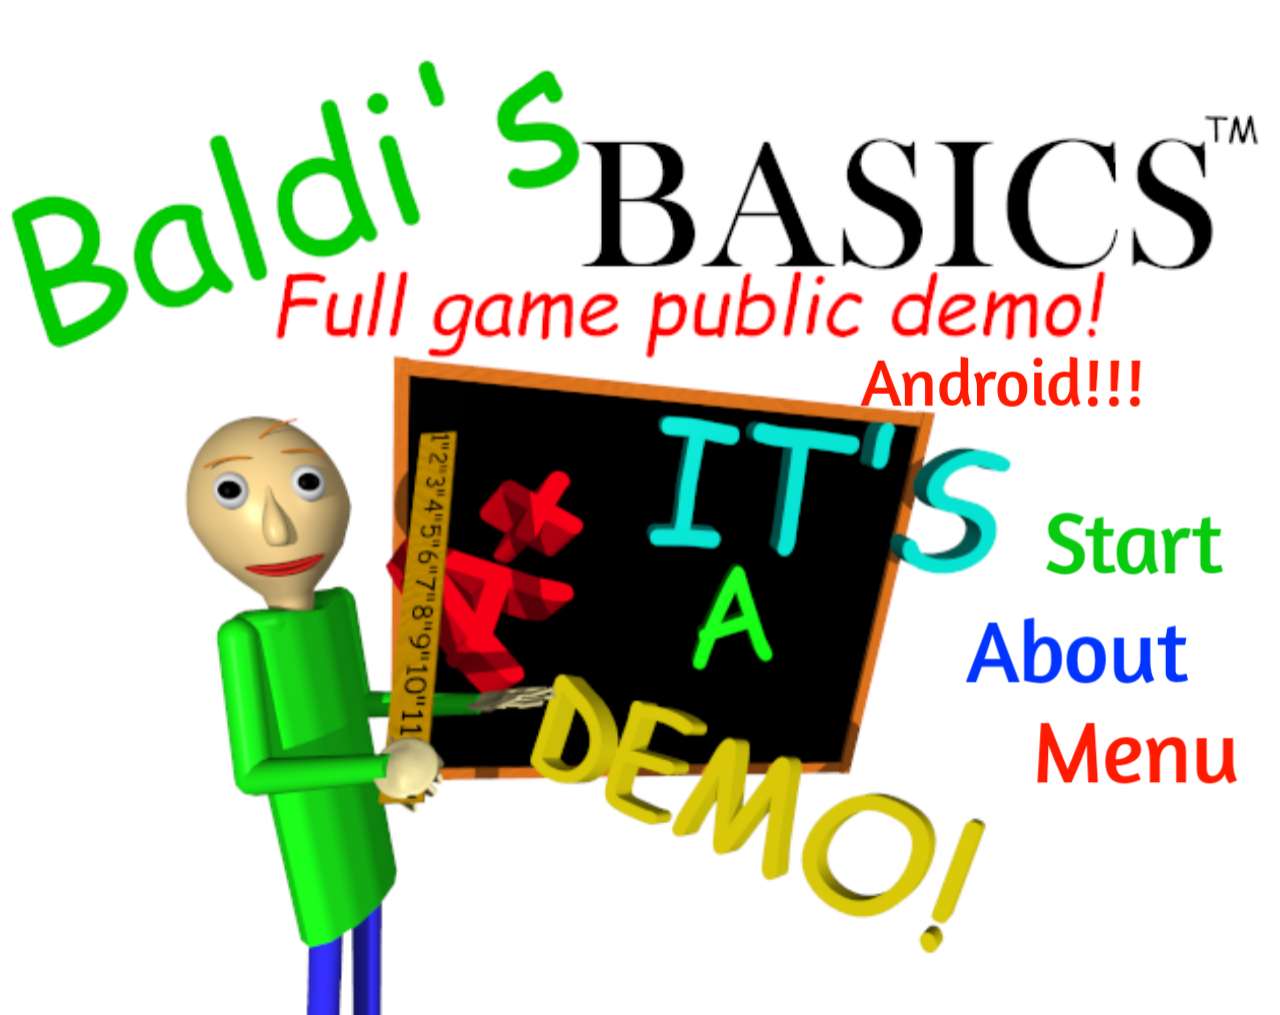 Baldis basics full game. БАЛДИ игра. Игра Baldi's Basics. Обложка Baldi s Basics. БАЛДИ логотип игры.